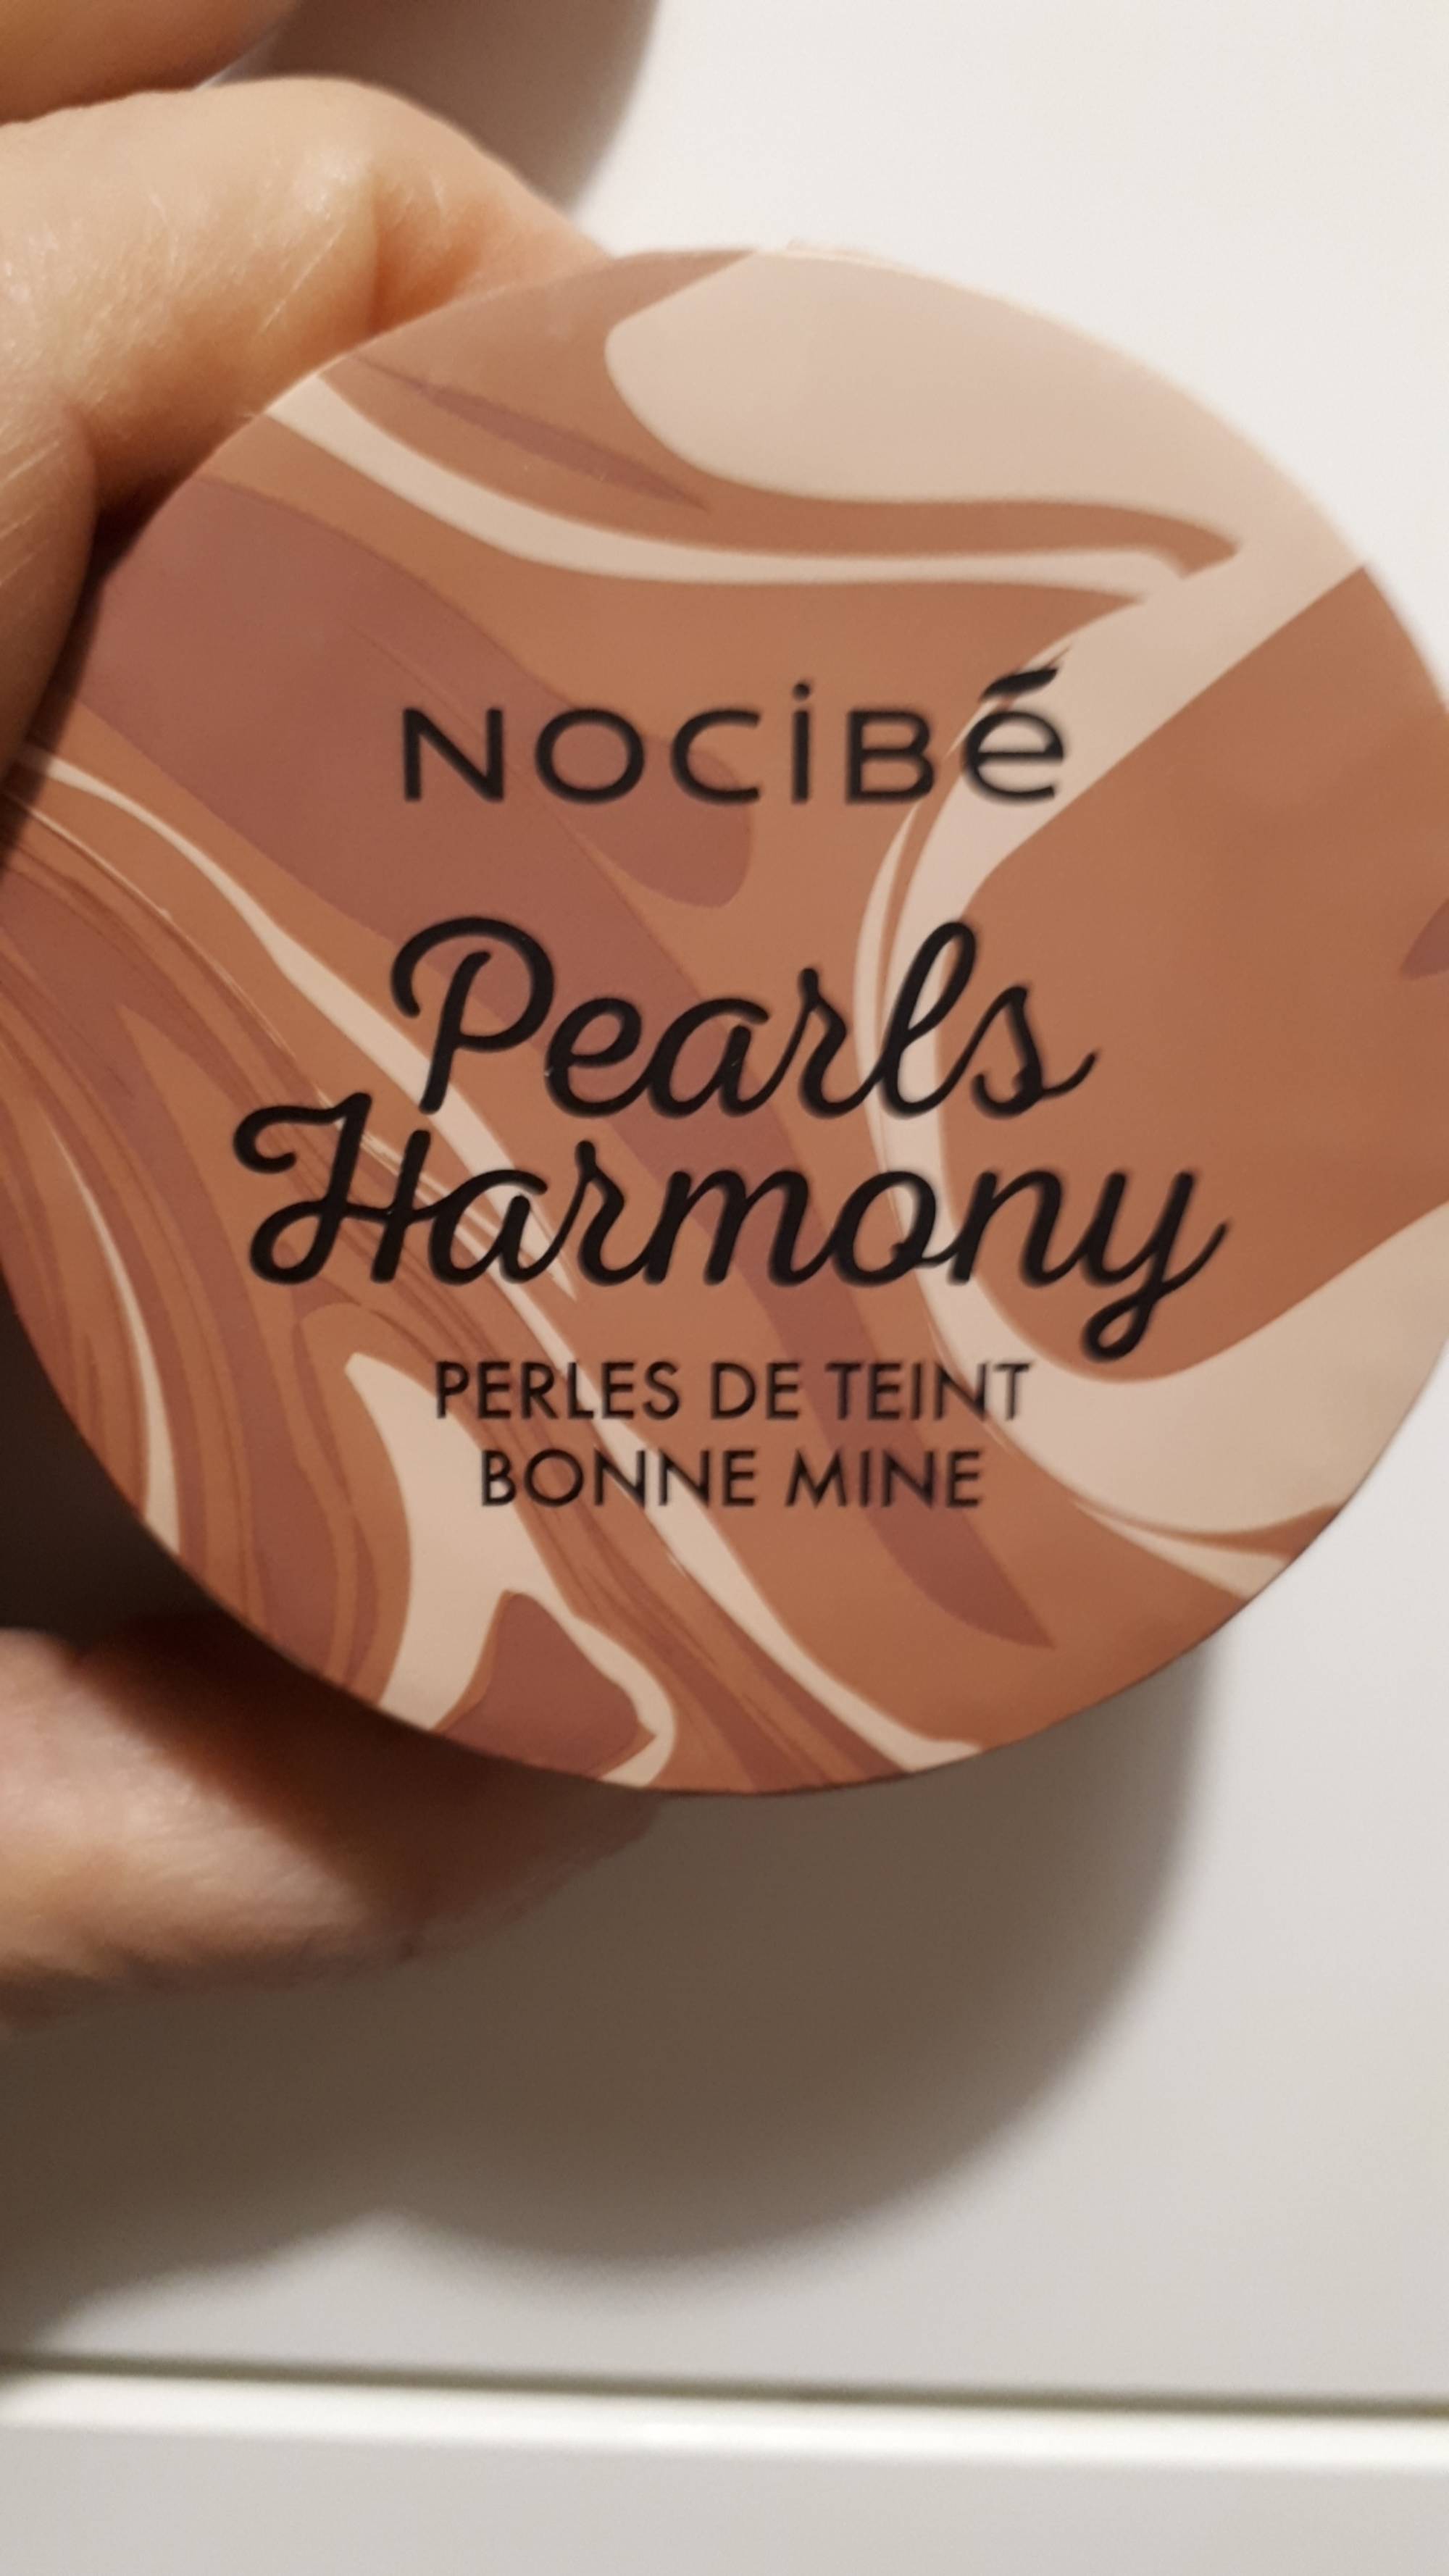 NOCIBÉ - Pearls harmony - Perles de teint bonne mine